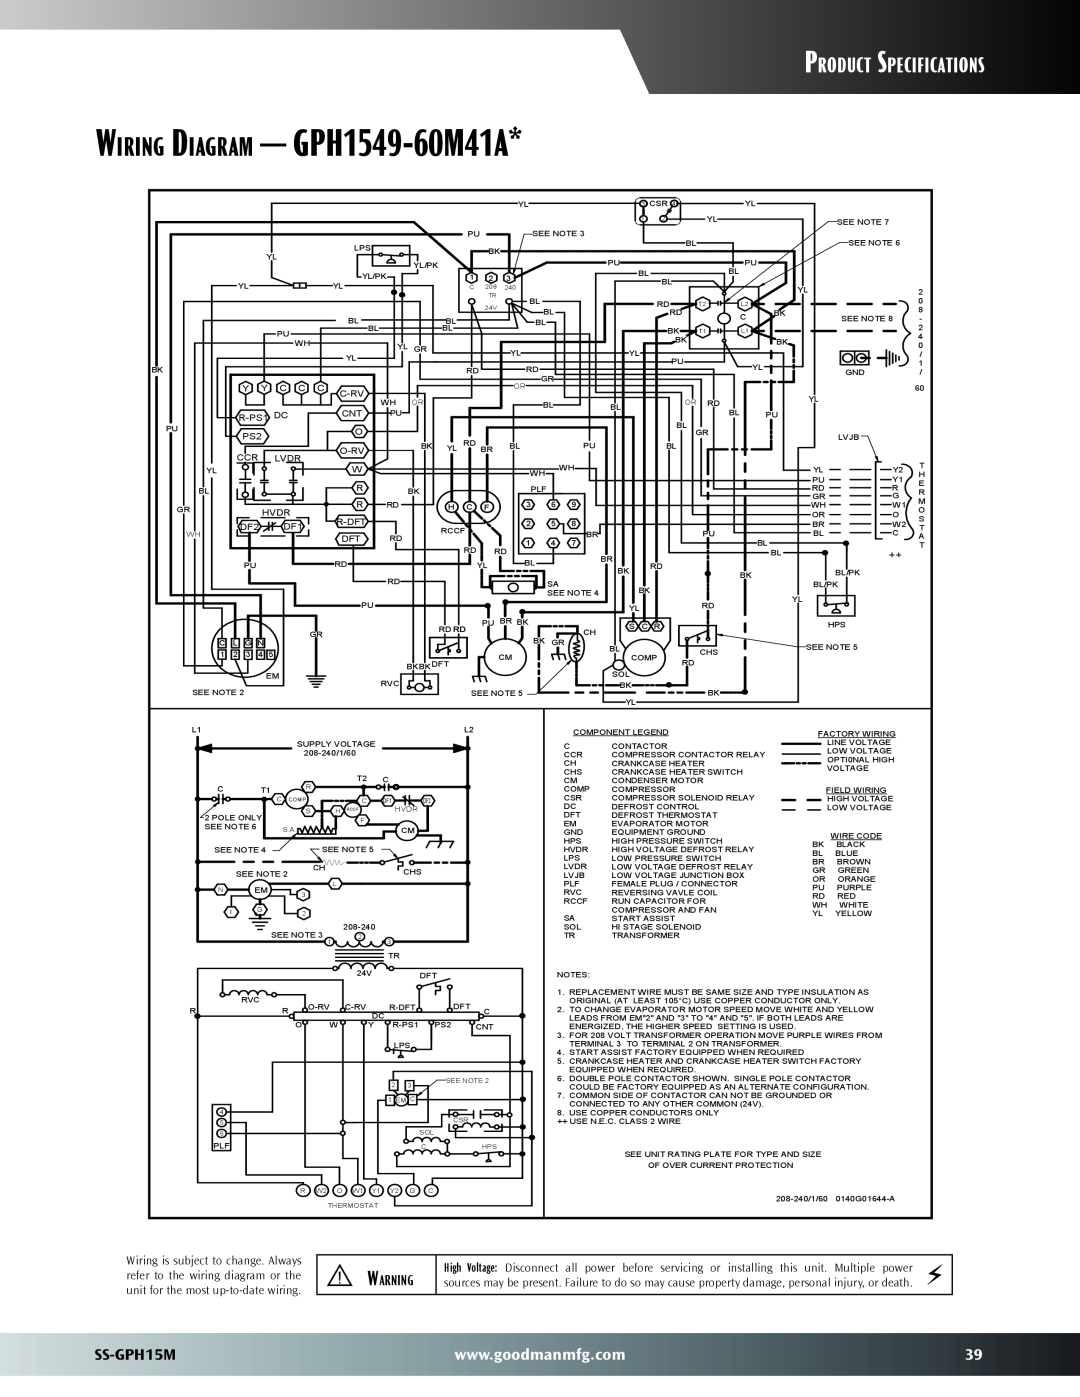 Goodman Mfg warranty Wiring Diagram — GPH1549-60M41A, Product Specifications, SS-GPH15M 